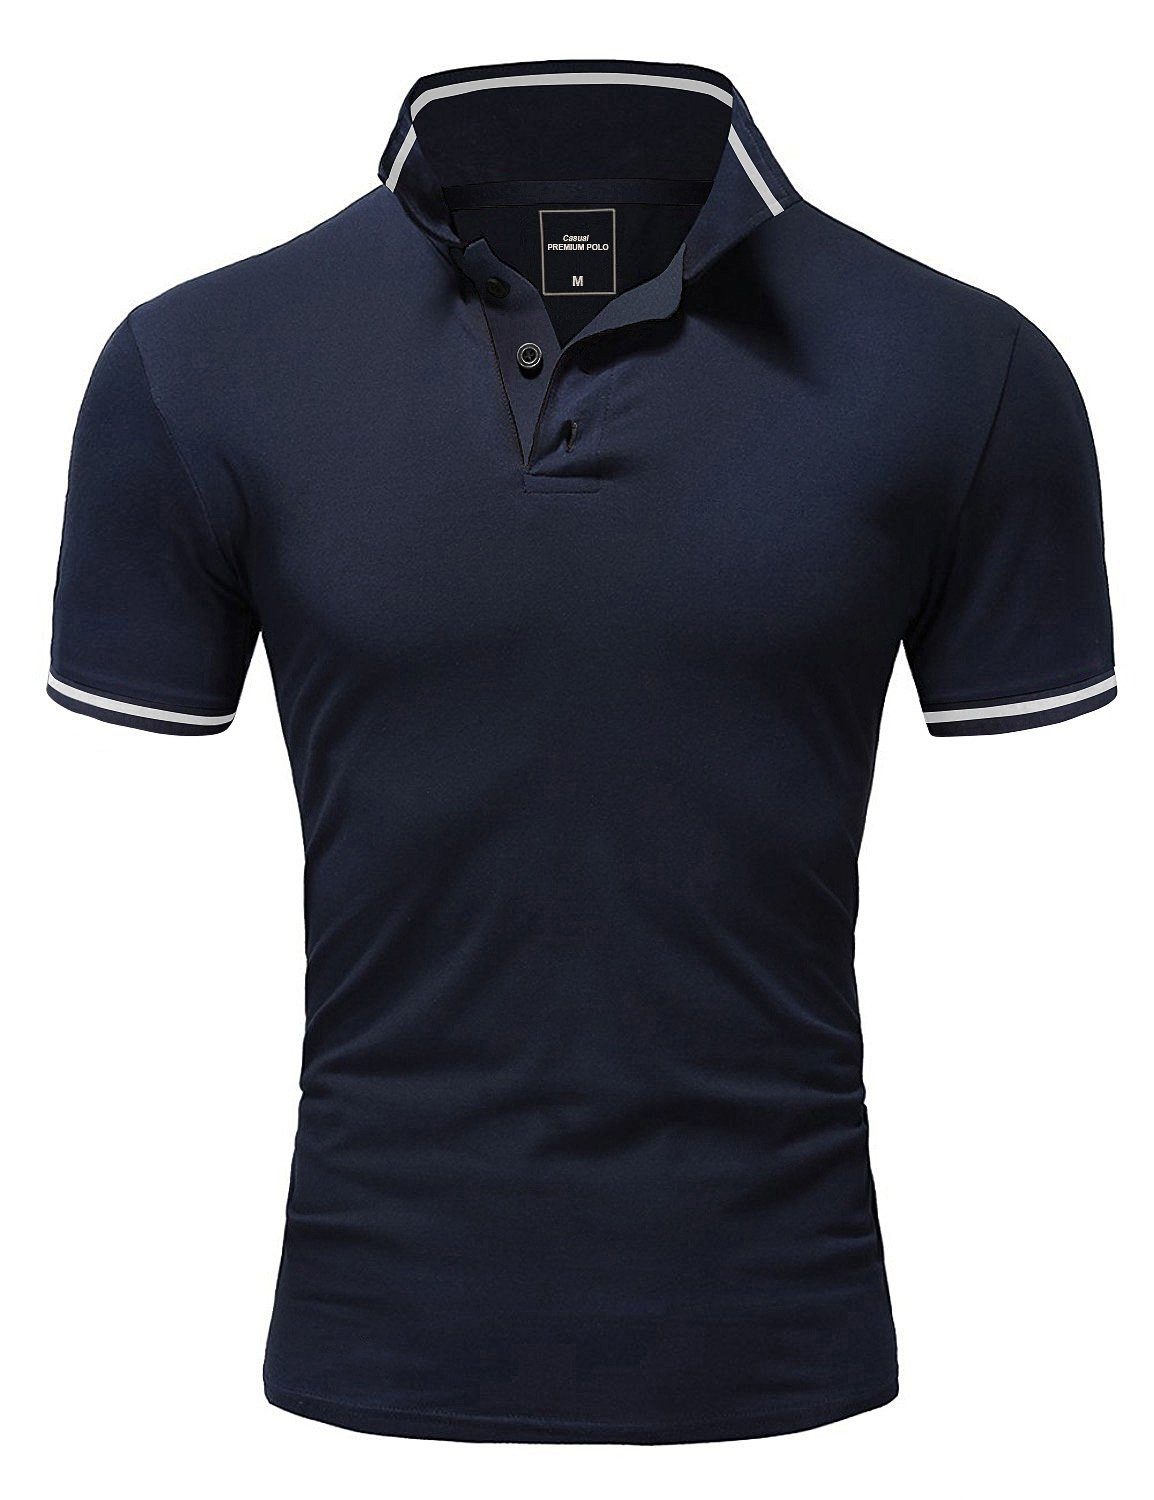 PROVIDENCE Basic Navyblau/Weiß T-Shirt Kontrast Kurzarm Herren Poloshirt Amaci&Sons Polohemd